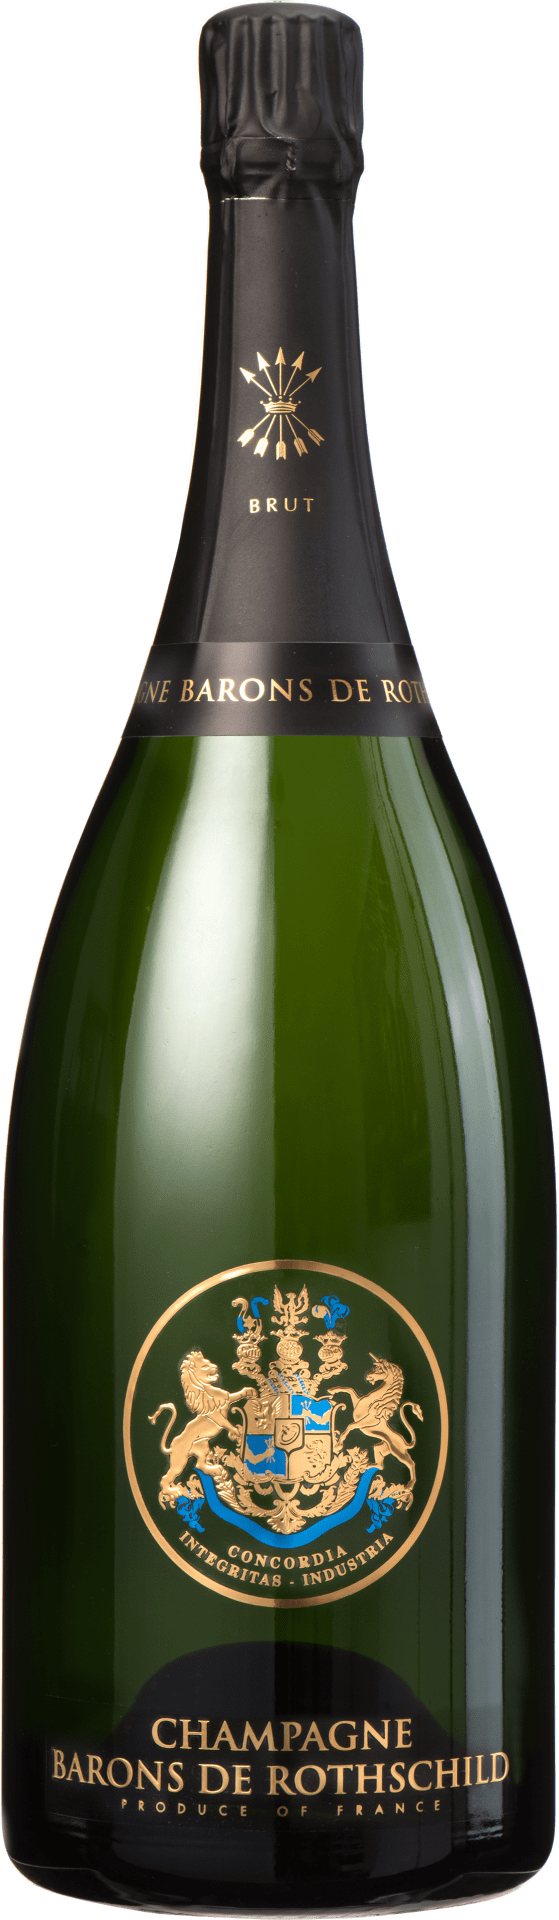 Champagne Barons de Rothschild Brut MG